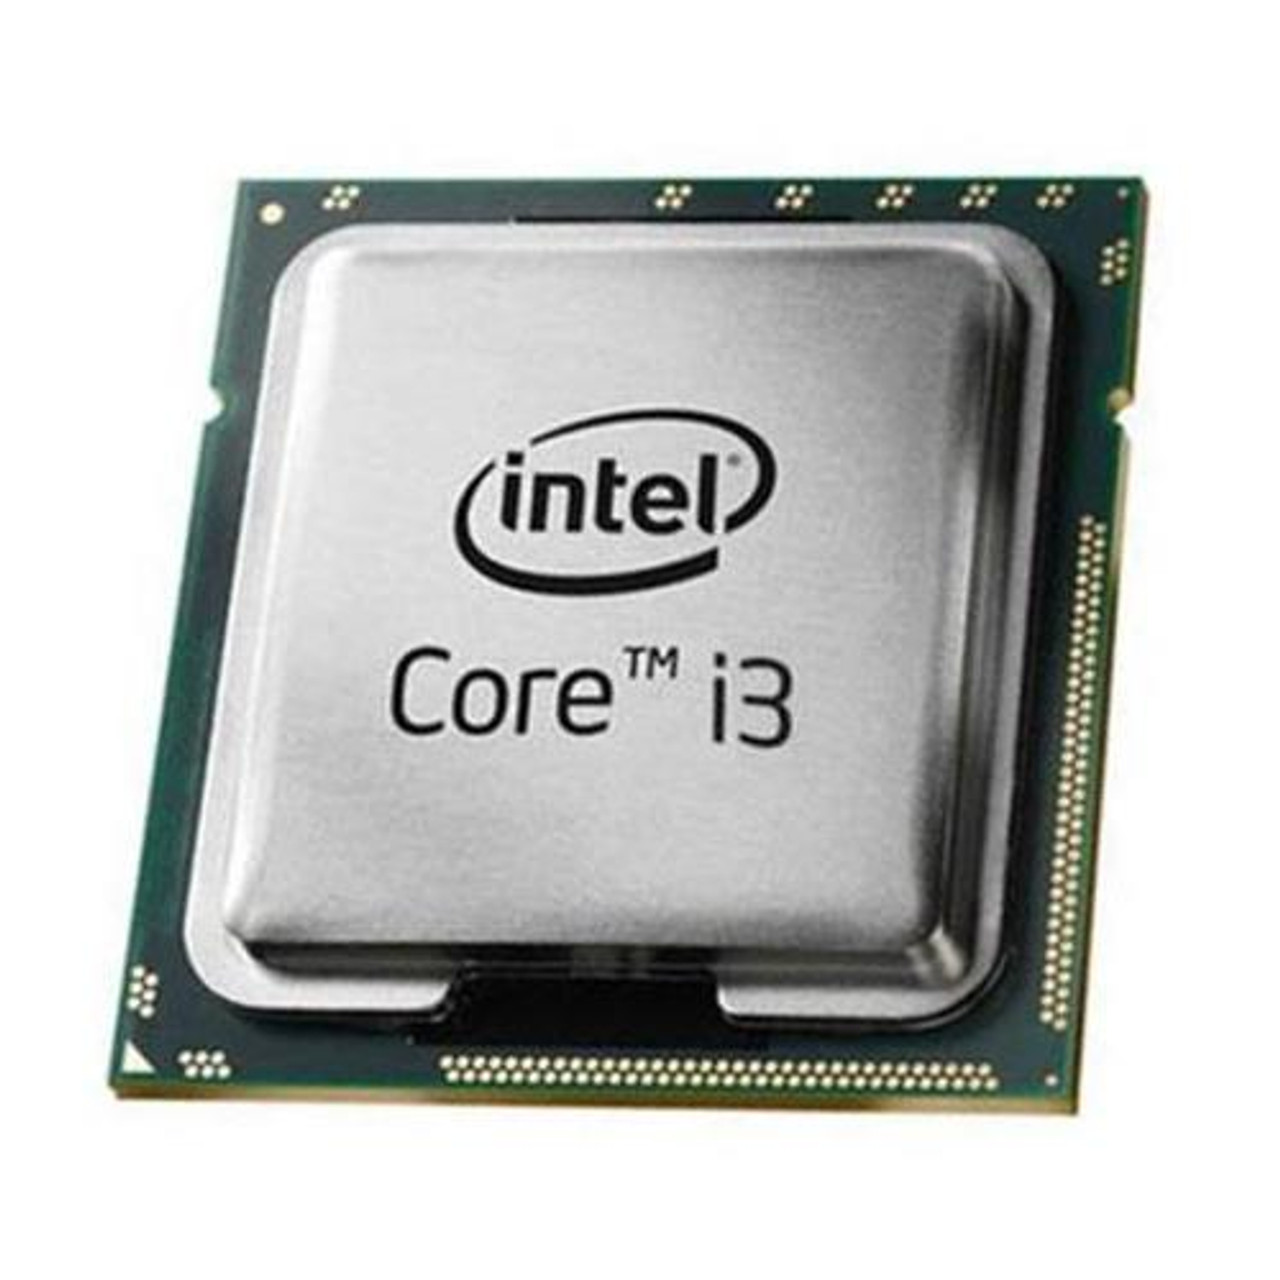 新作 Core Intel Intel Core i3-3220 i3-3220 Specs processor 3.3 GHz MB L3 